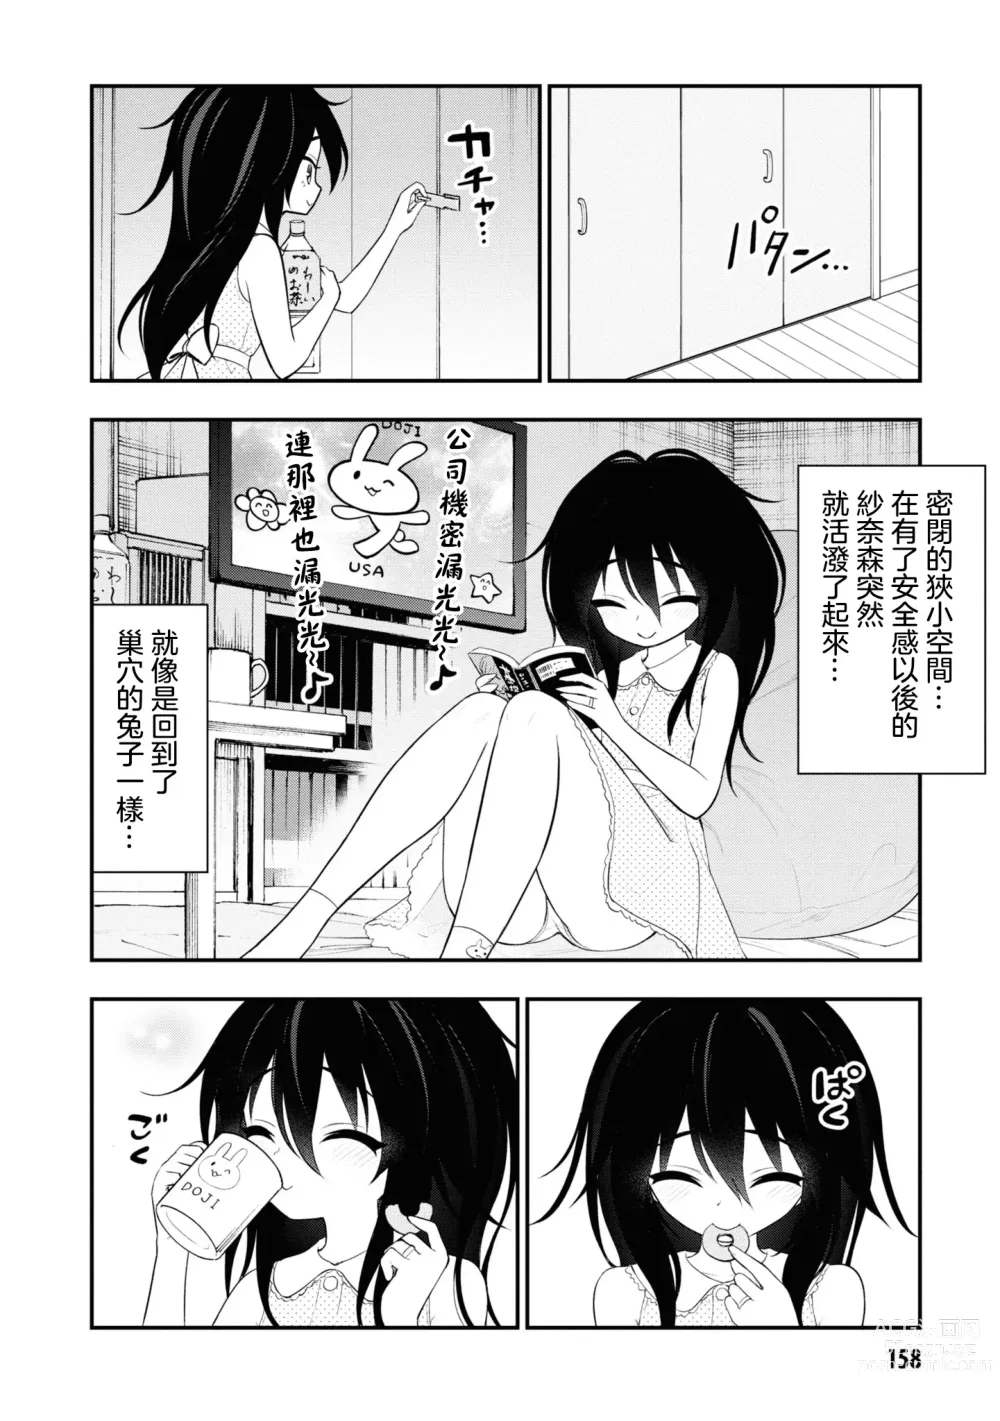 Page 163 of doujinshi 淫獄小區 VOL.2